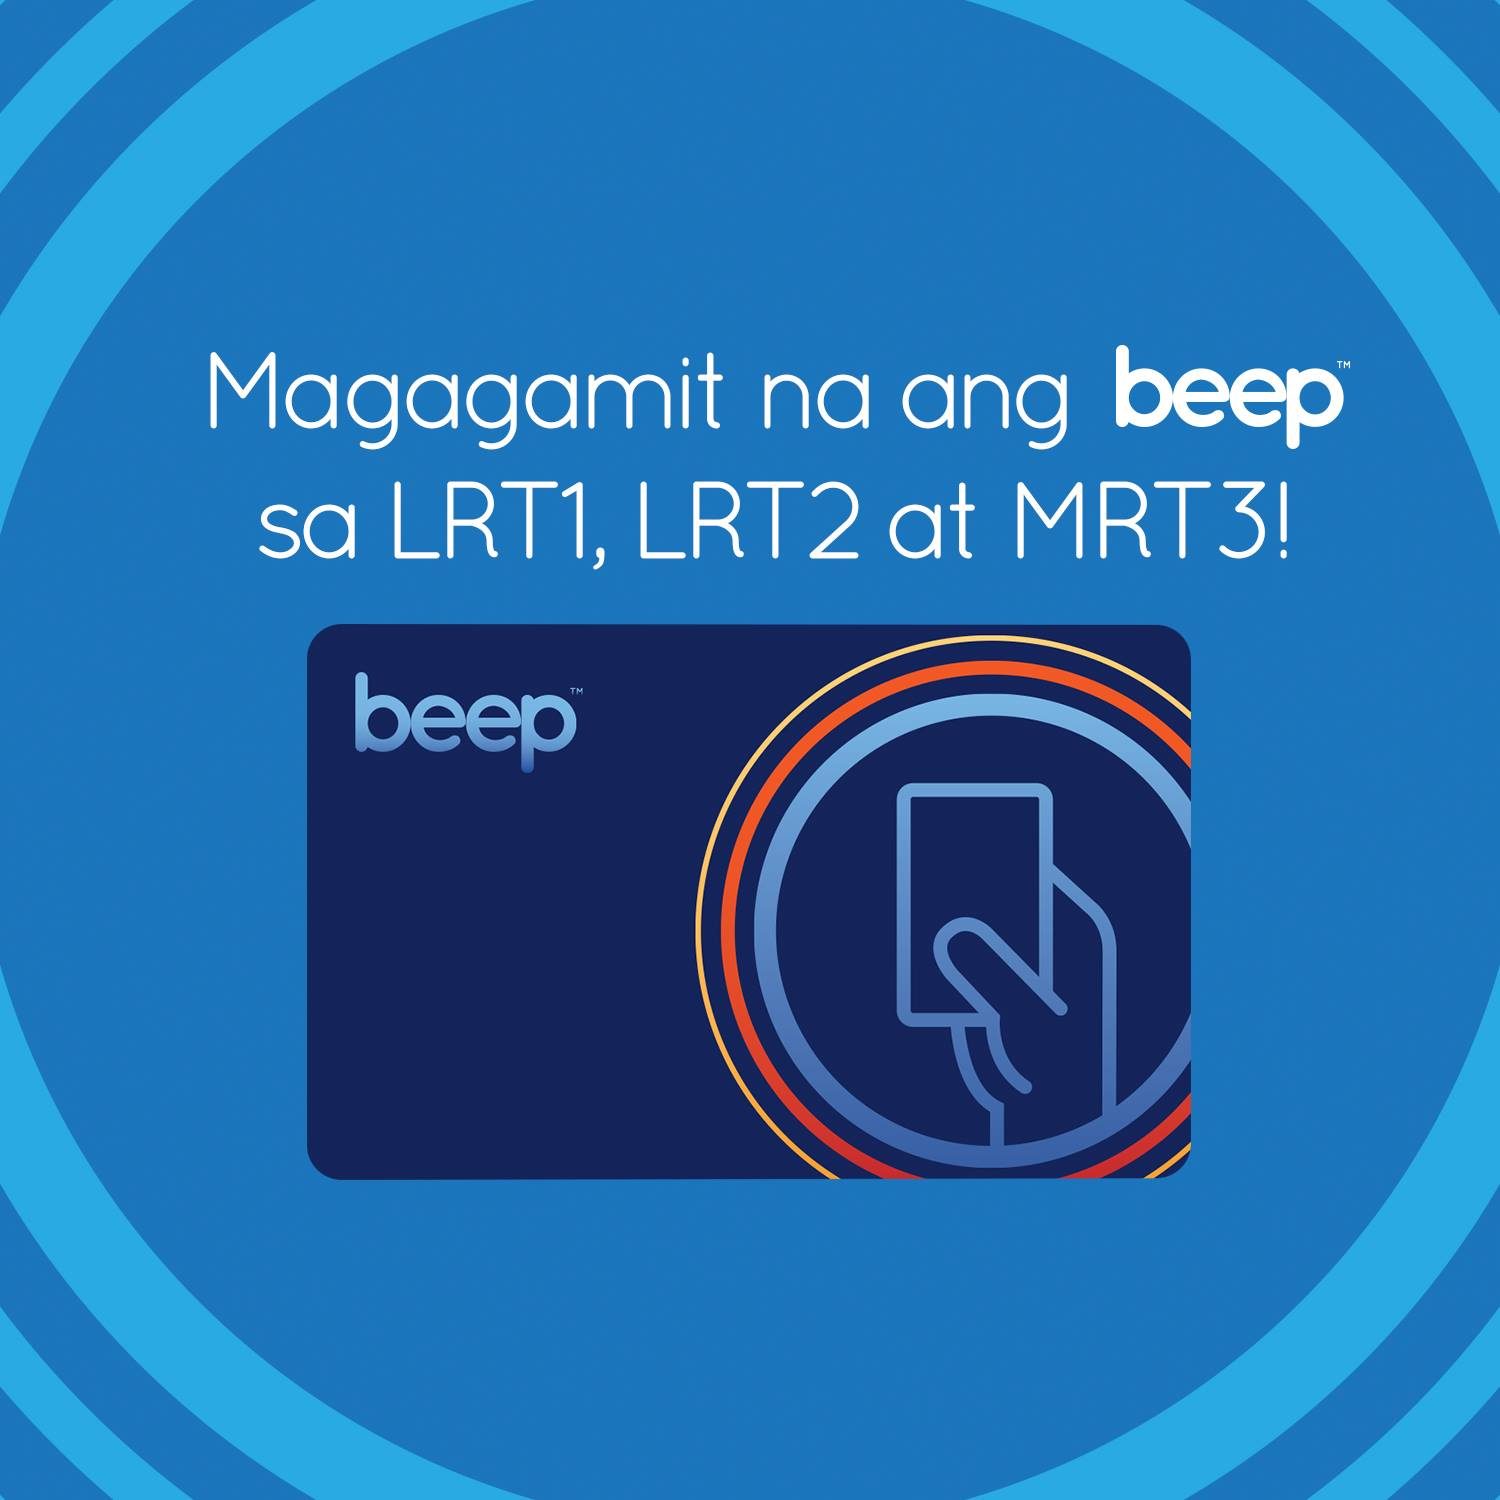 beep™ cards now fully operational on MRT3, LRT1, LRT2